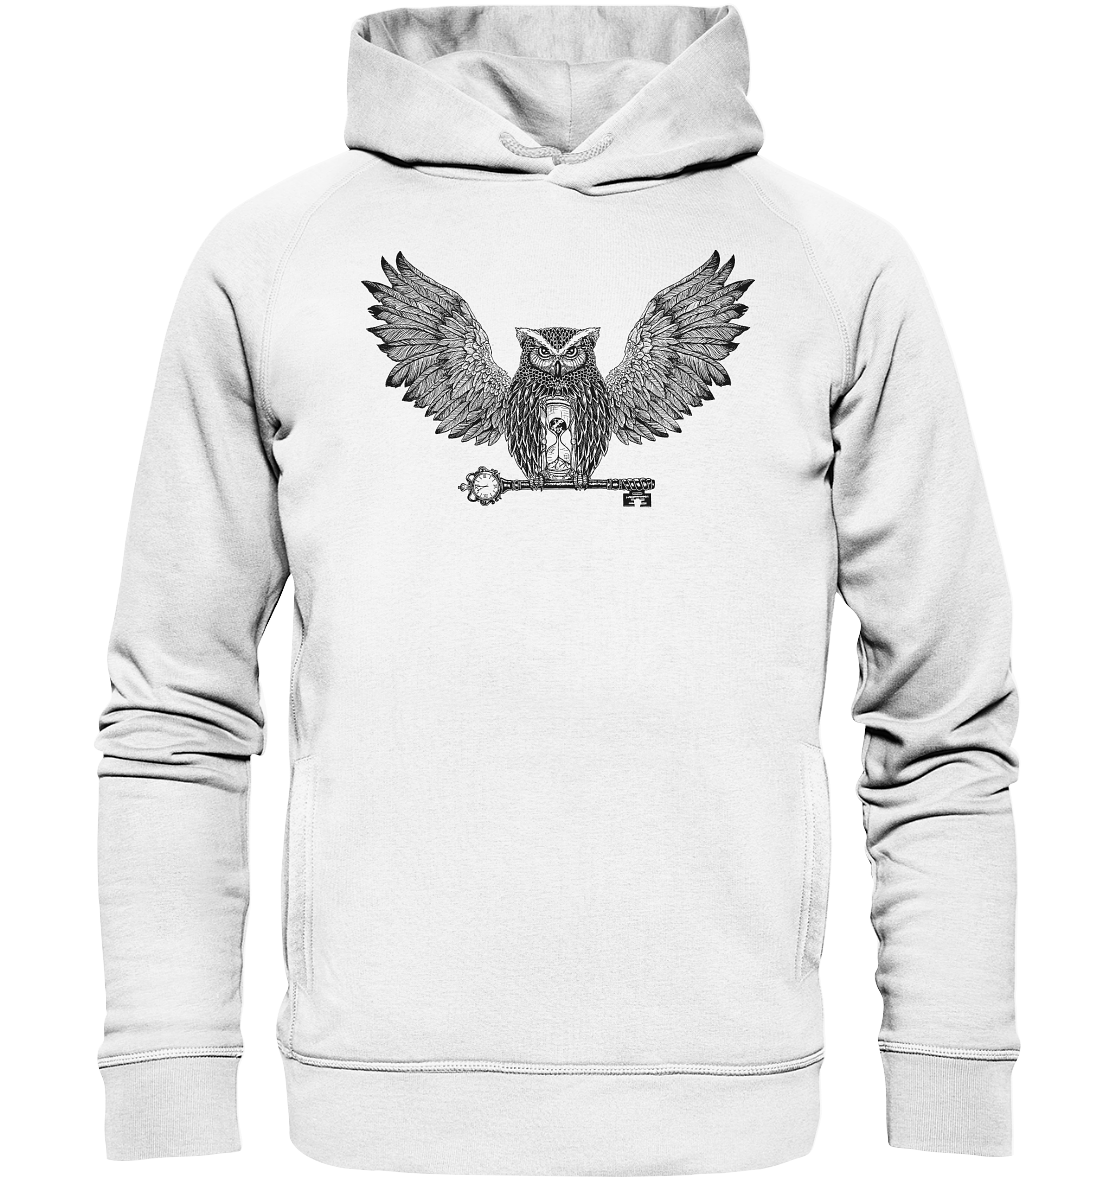 front-organic-fashion-hoodie-f8f8f8-1116x-5.png